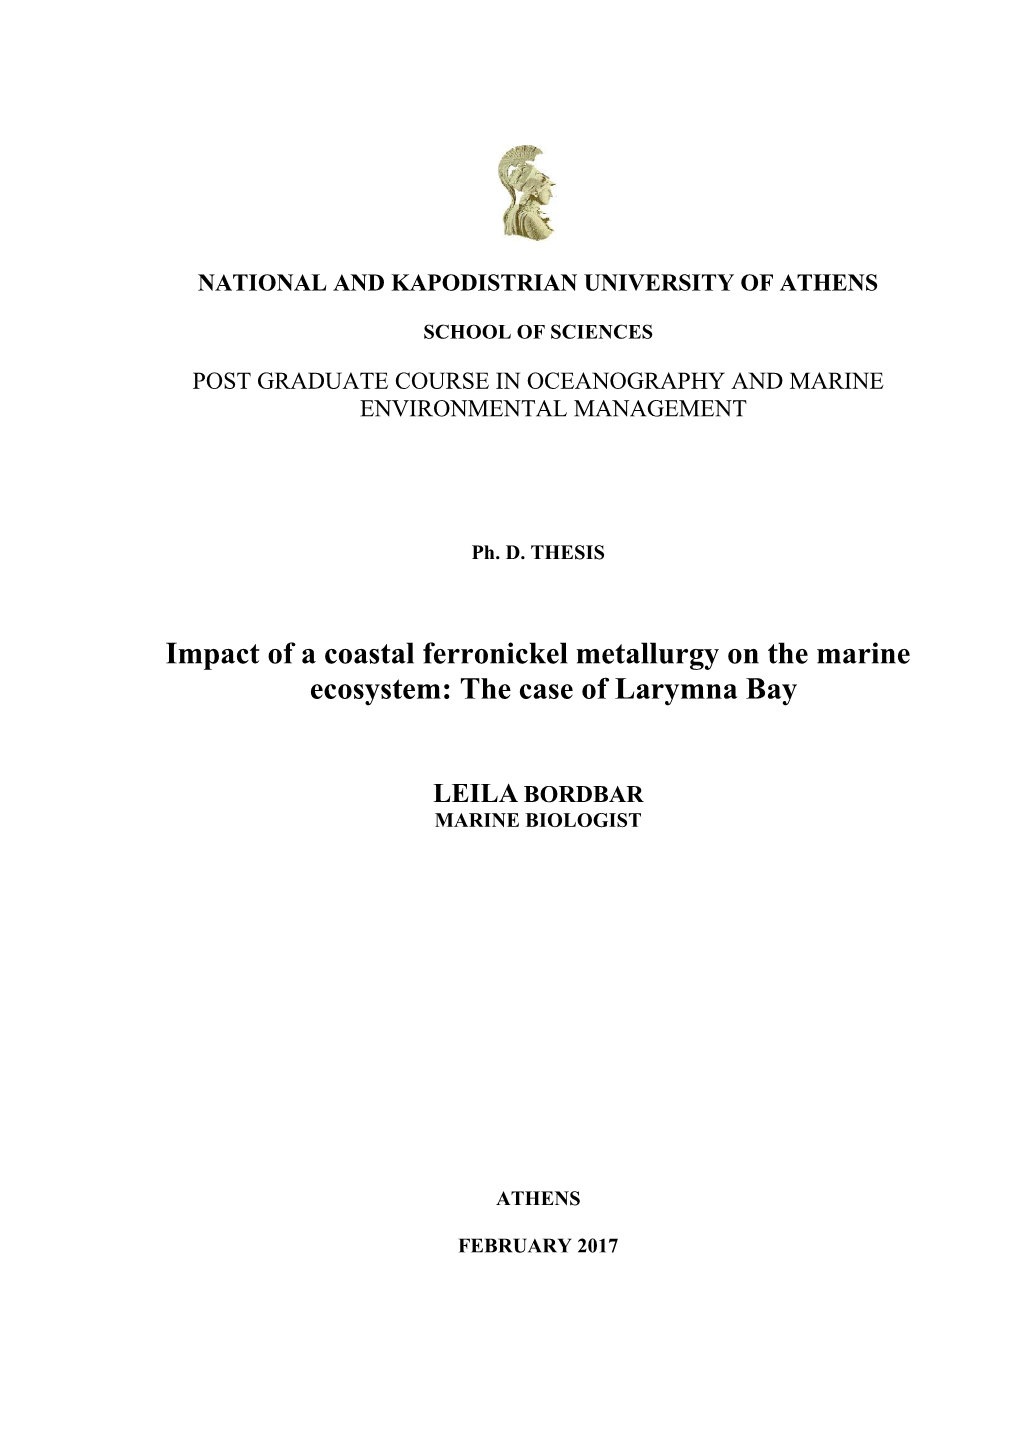 Impact of a Coastal Ferronickel Metallurgy on the Marine Ecosystem: the Case of Larymna Bay